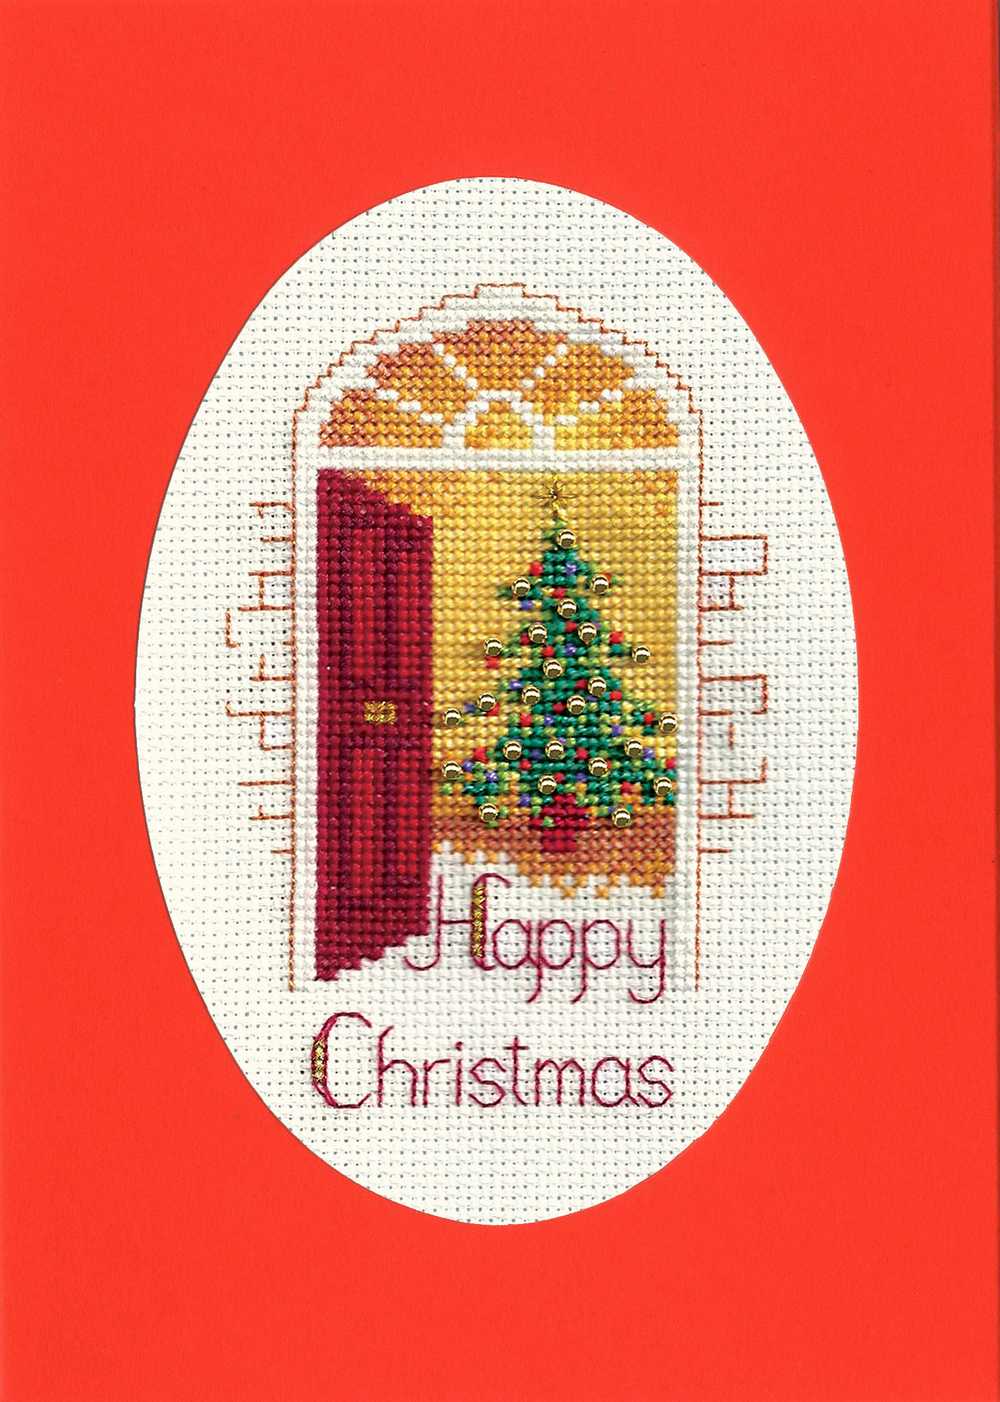 Christmas Card - Warm Welcome Cross Stitch Kit by Derwentwater